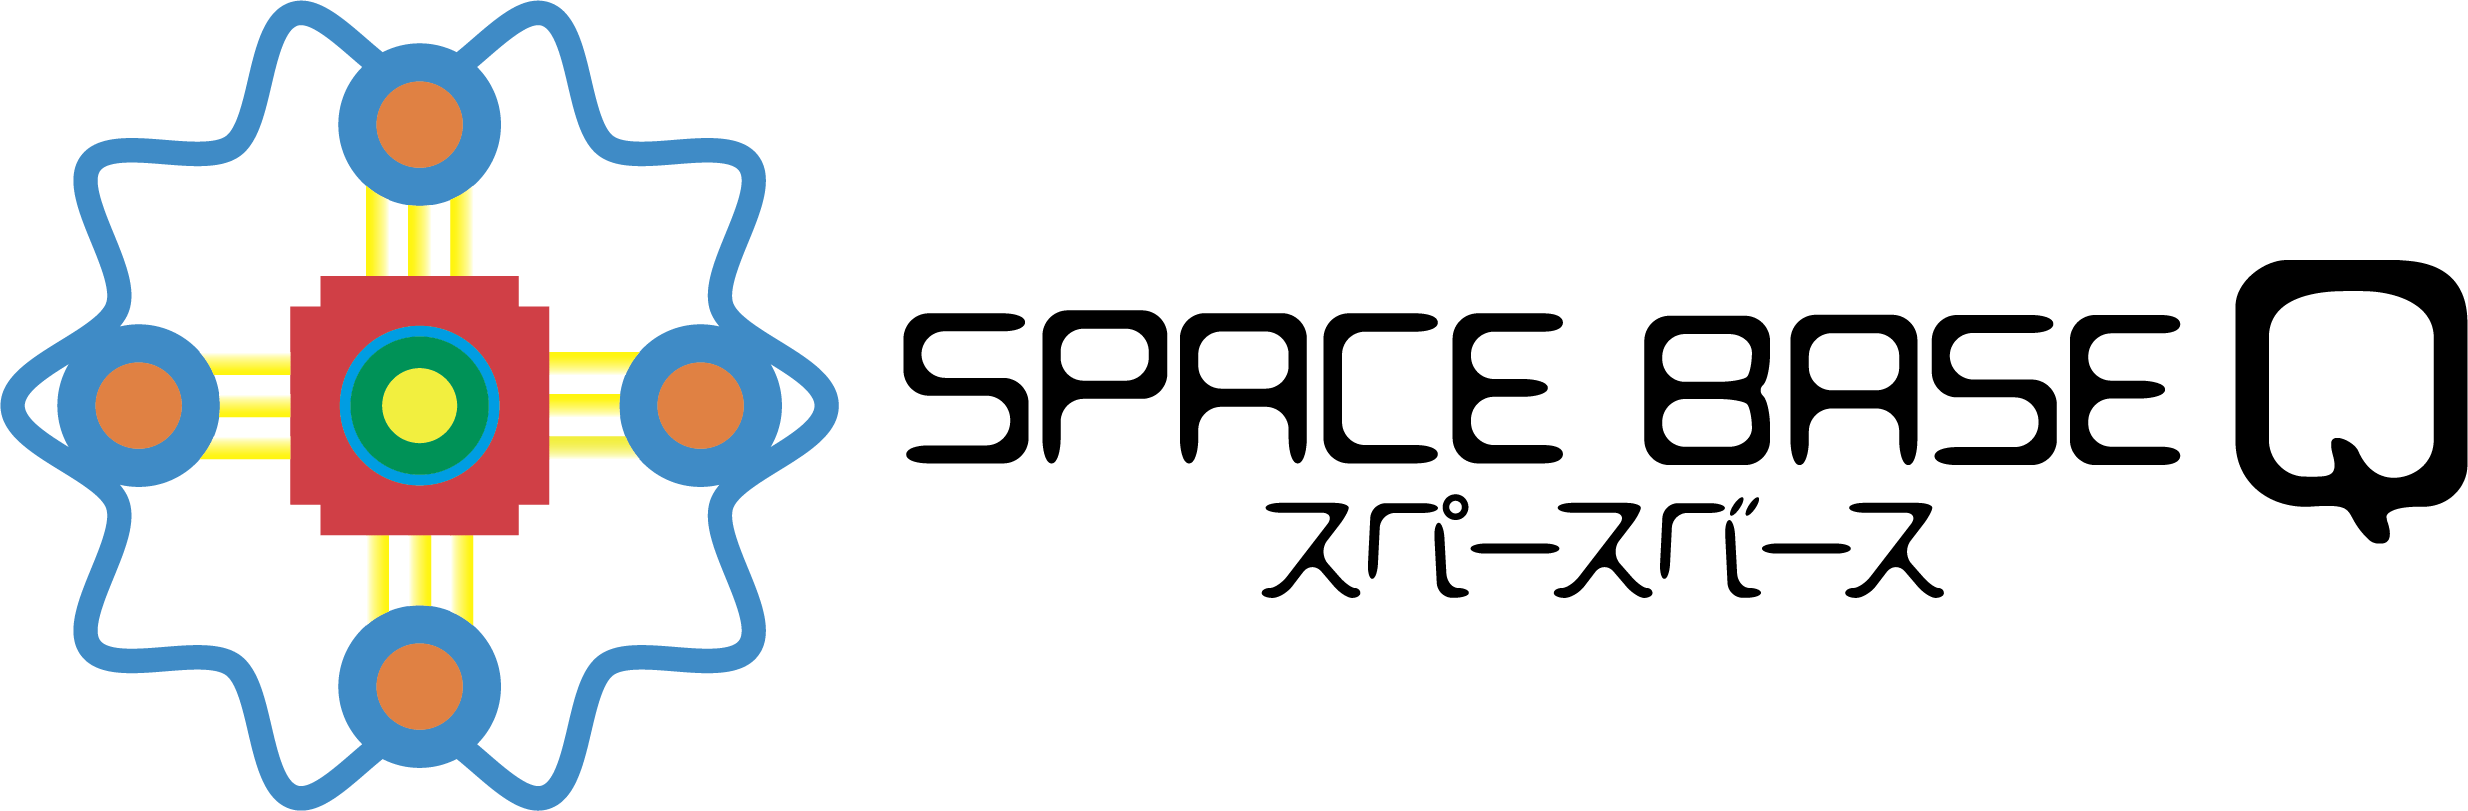 SpacebaseQ